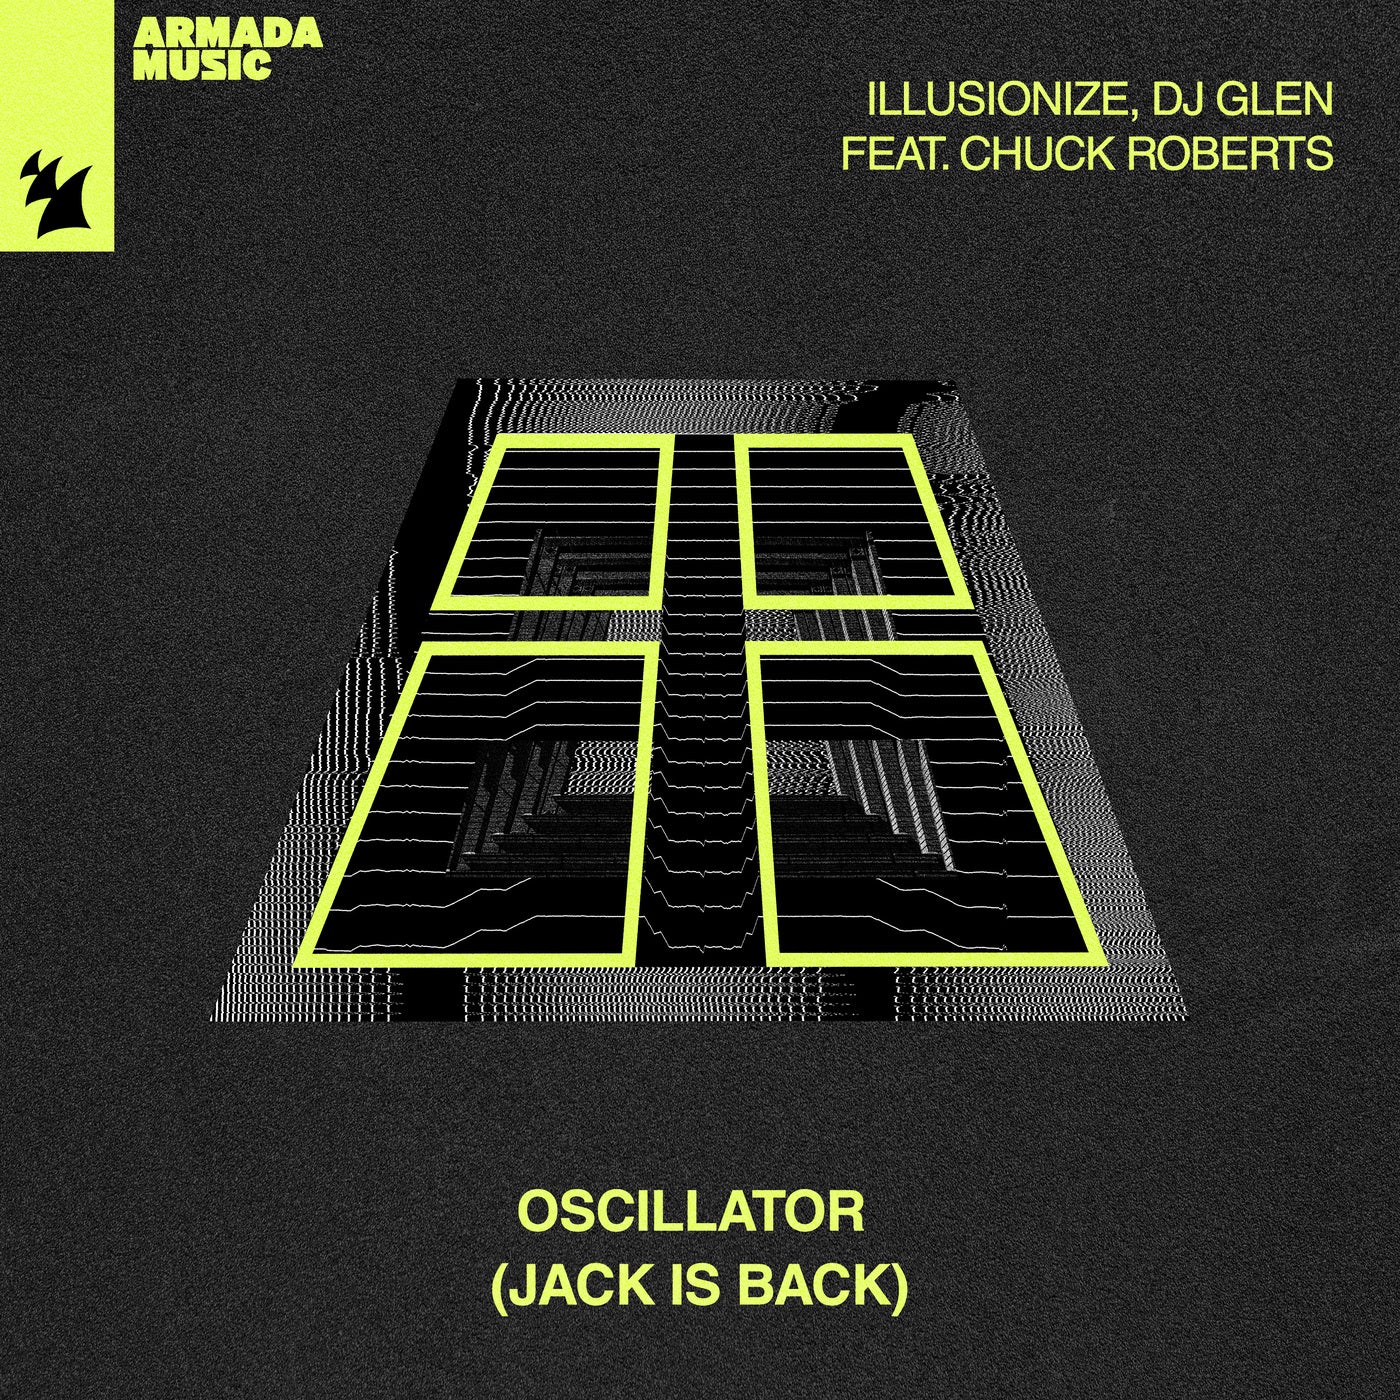 image cover: Chuck Roberts, DJ Glen, illusionize - Oscillator (Jack Is Back) on Armada Music